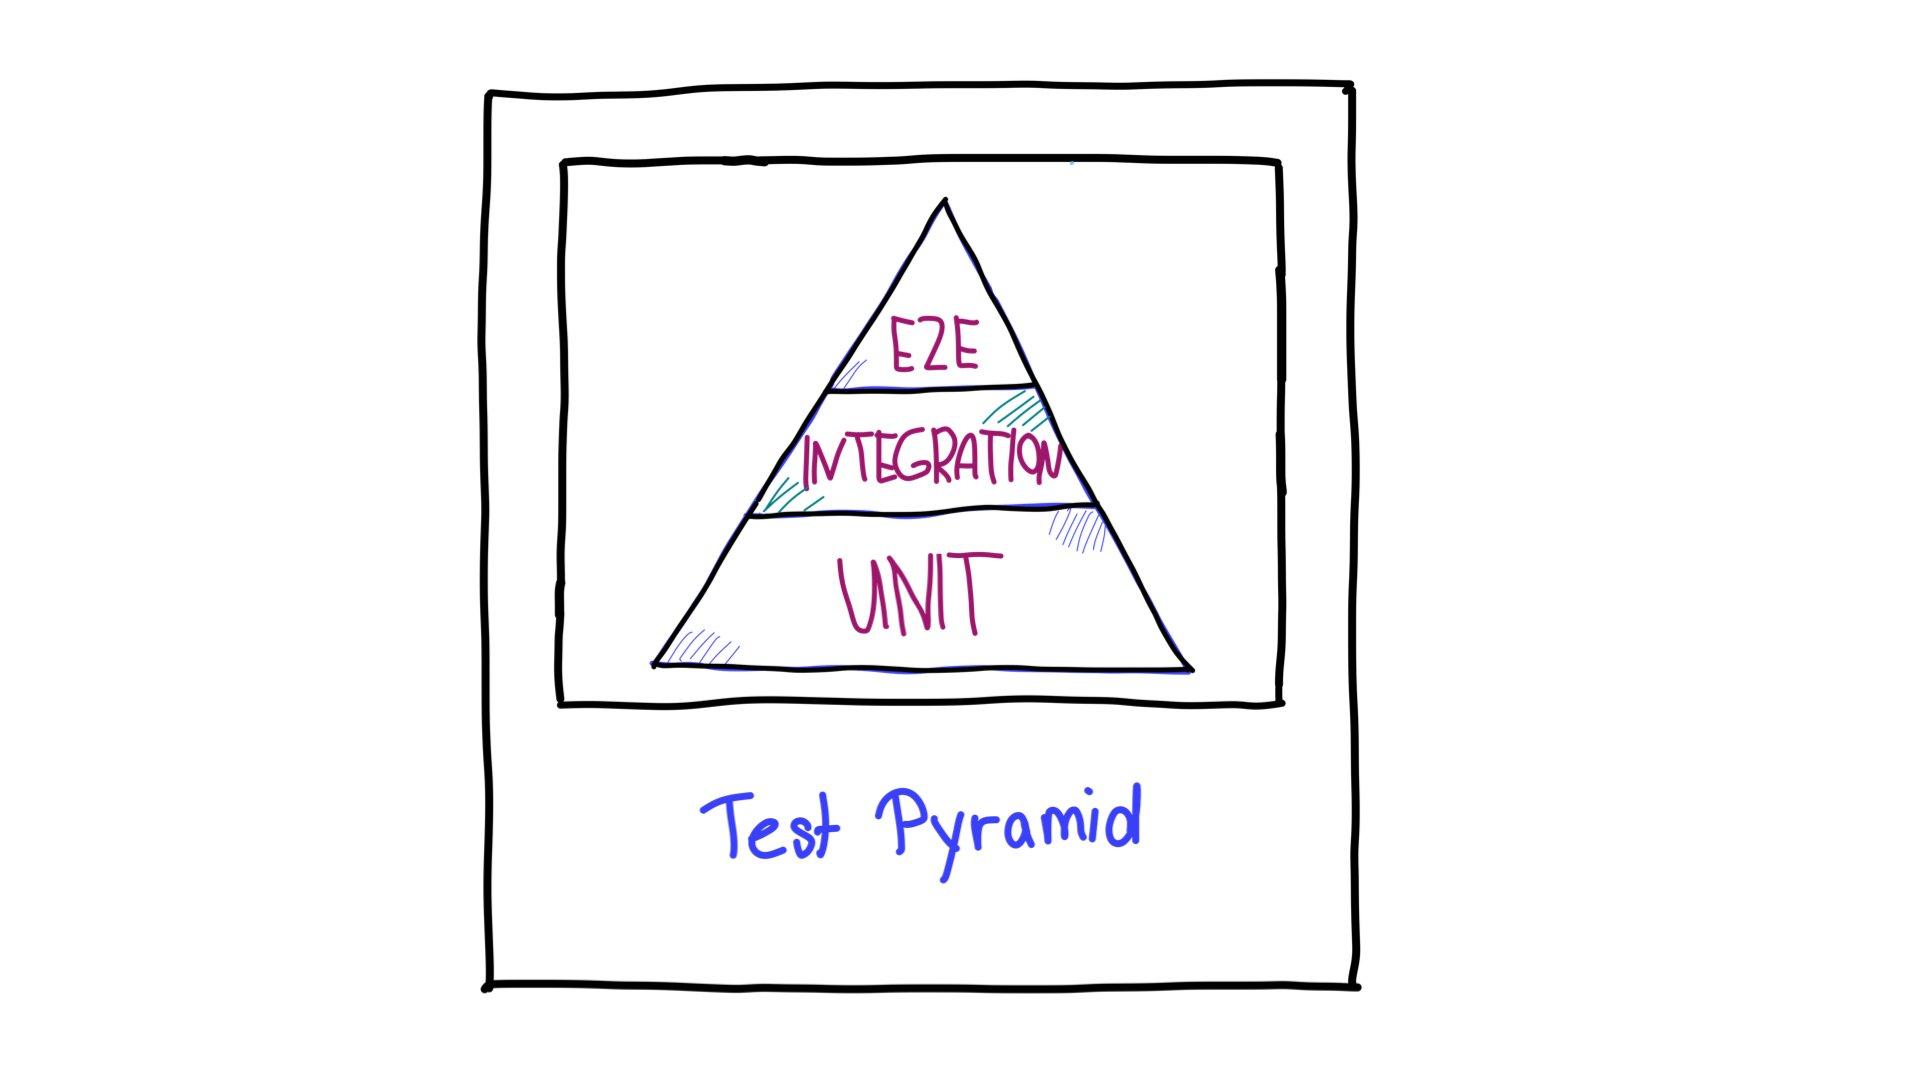 Piramida pengujian,
    dengan pengujian end-to-end (E2E) di bagian atas, pengujian integrasi di tengah, dan
    pengujian unit di bagian bawah.